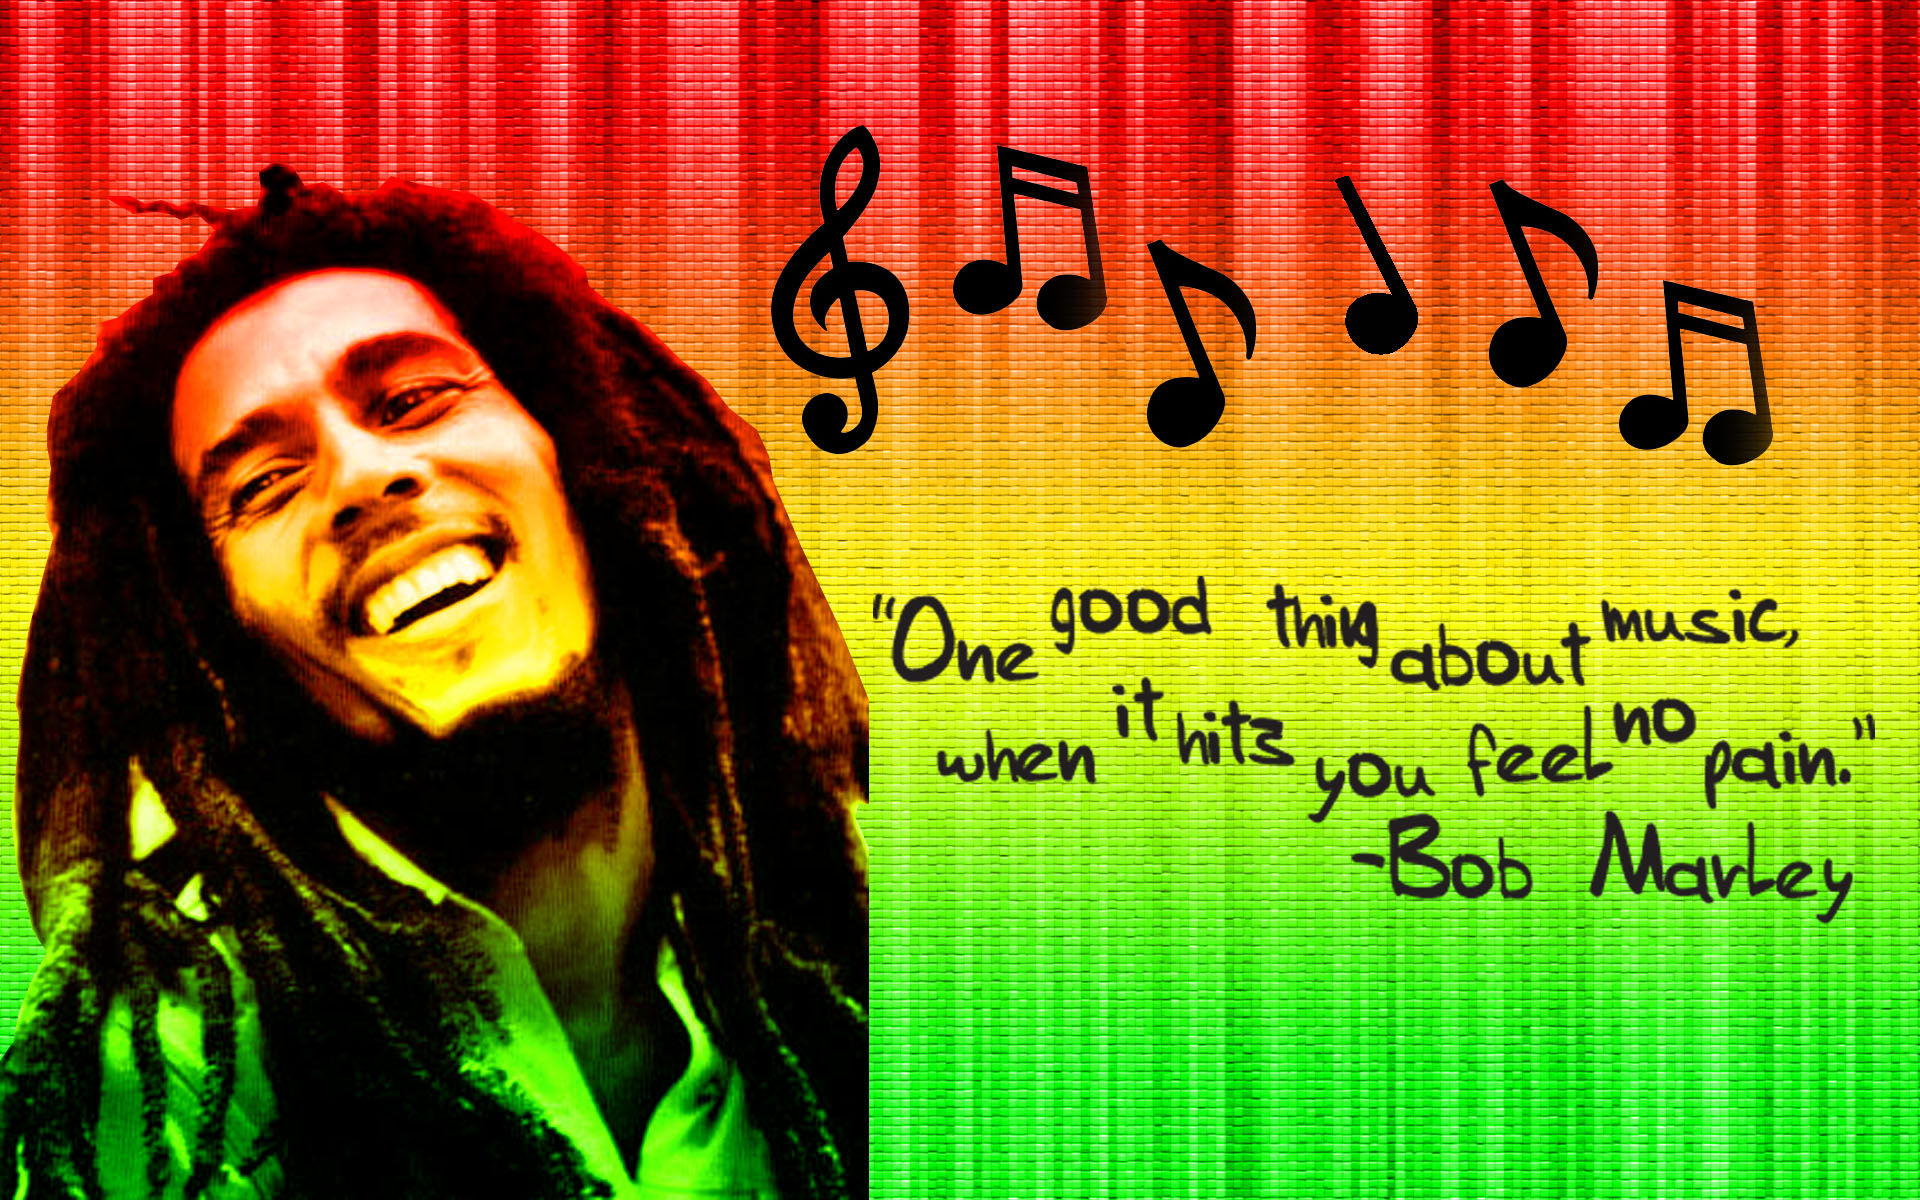 Bob Marley, Music, And Quote Image - Bob Marley Images Download - HD Wallpaper 